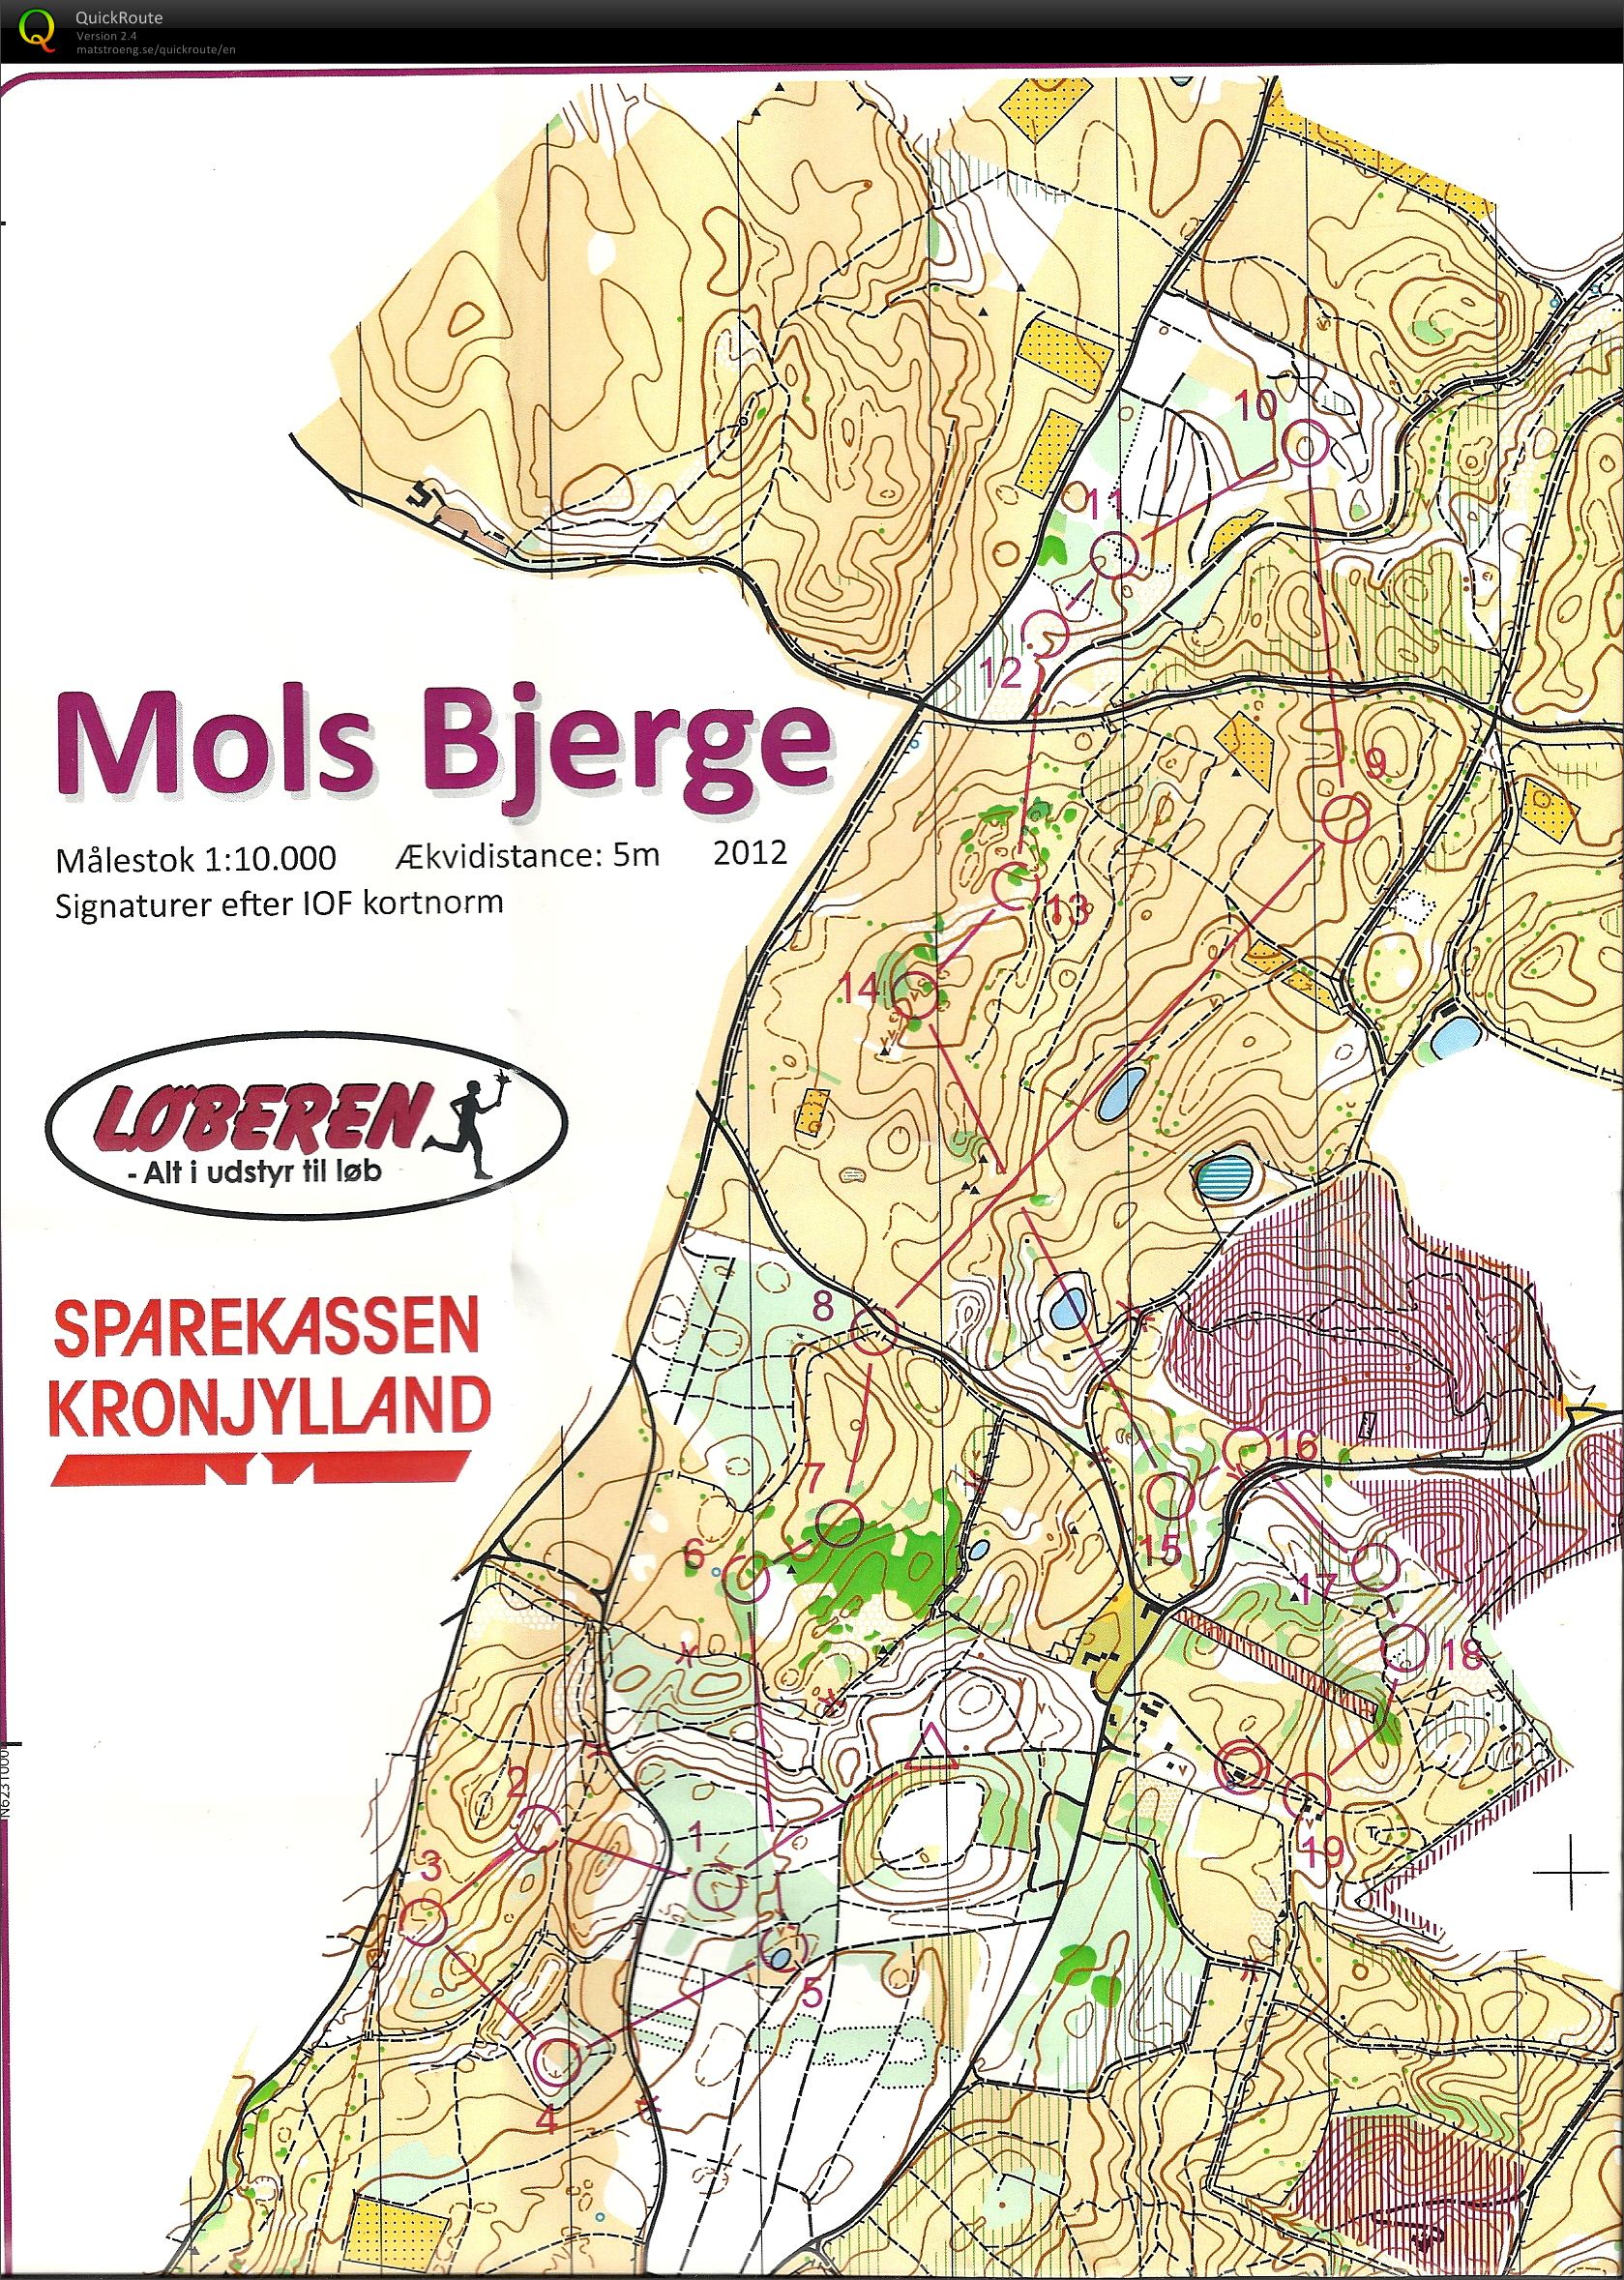 Mols Bjerge, JFM Lang, D45, LeneSN (19-08-2012)